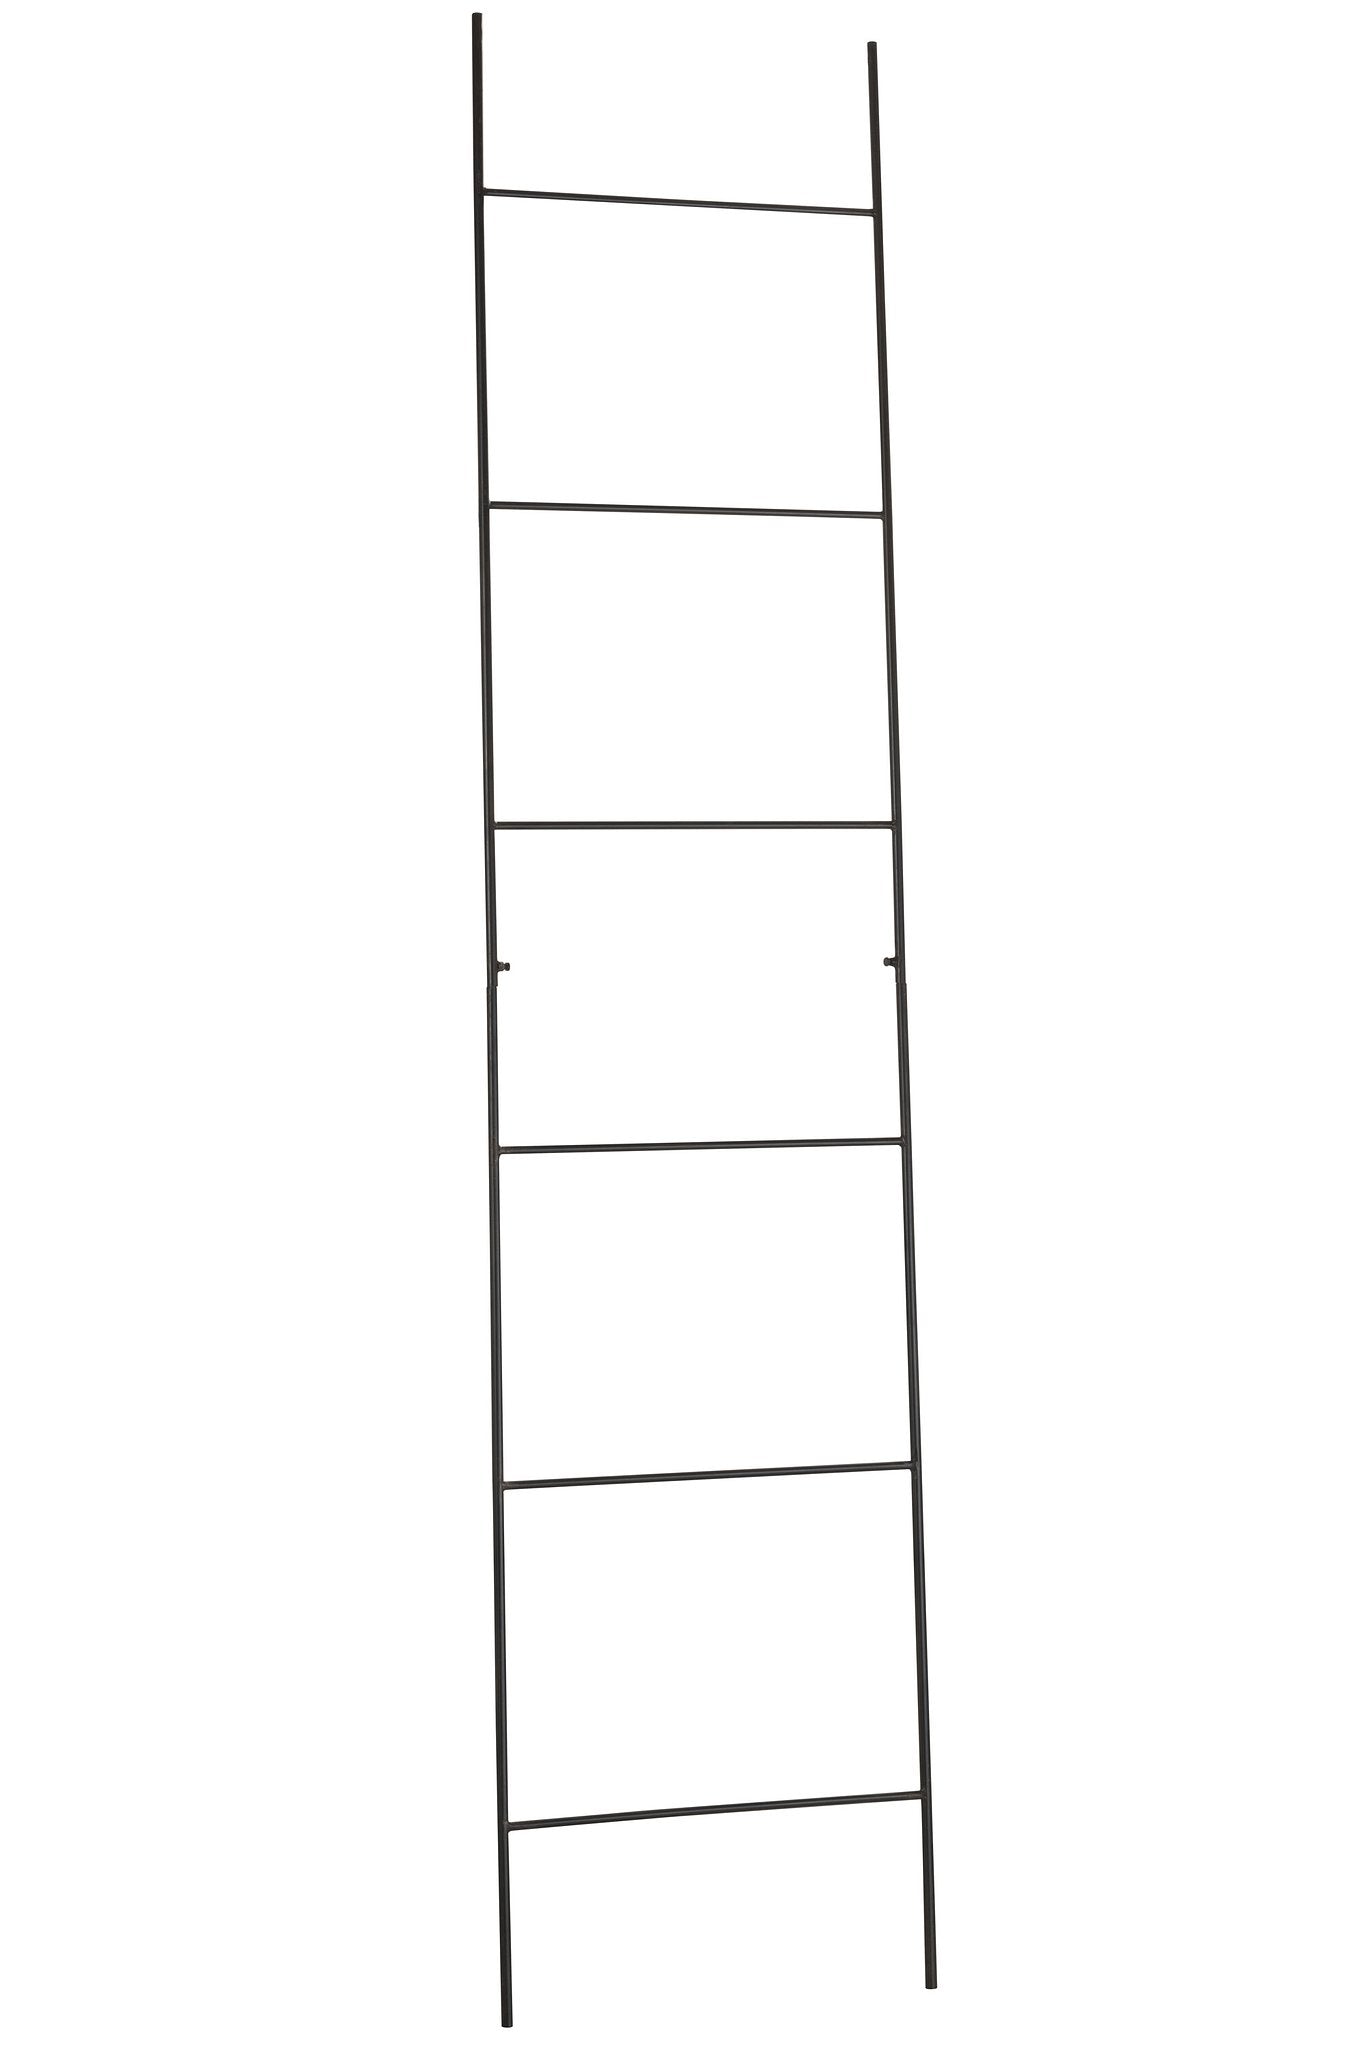 J-Line Textiel Ladder Metaal Zwart